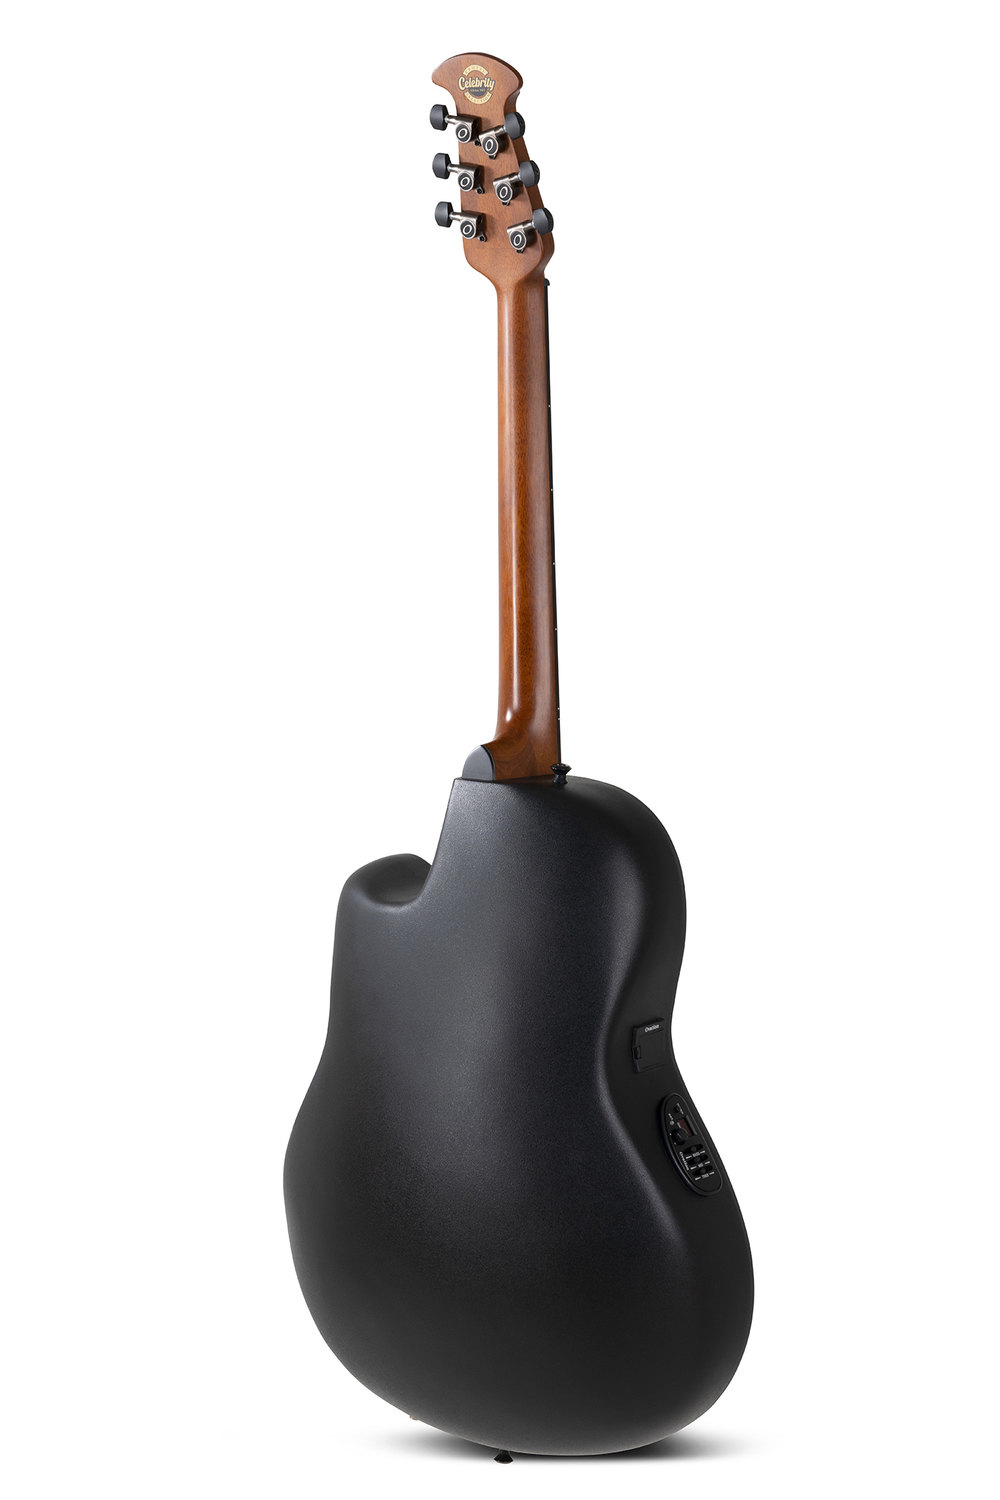 Ovation Celebrity Traditional Ce Electro Ov - Australian Blackwood - Electro acoustic guitar - Variation 5